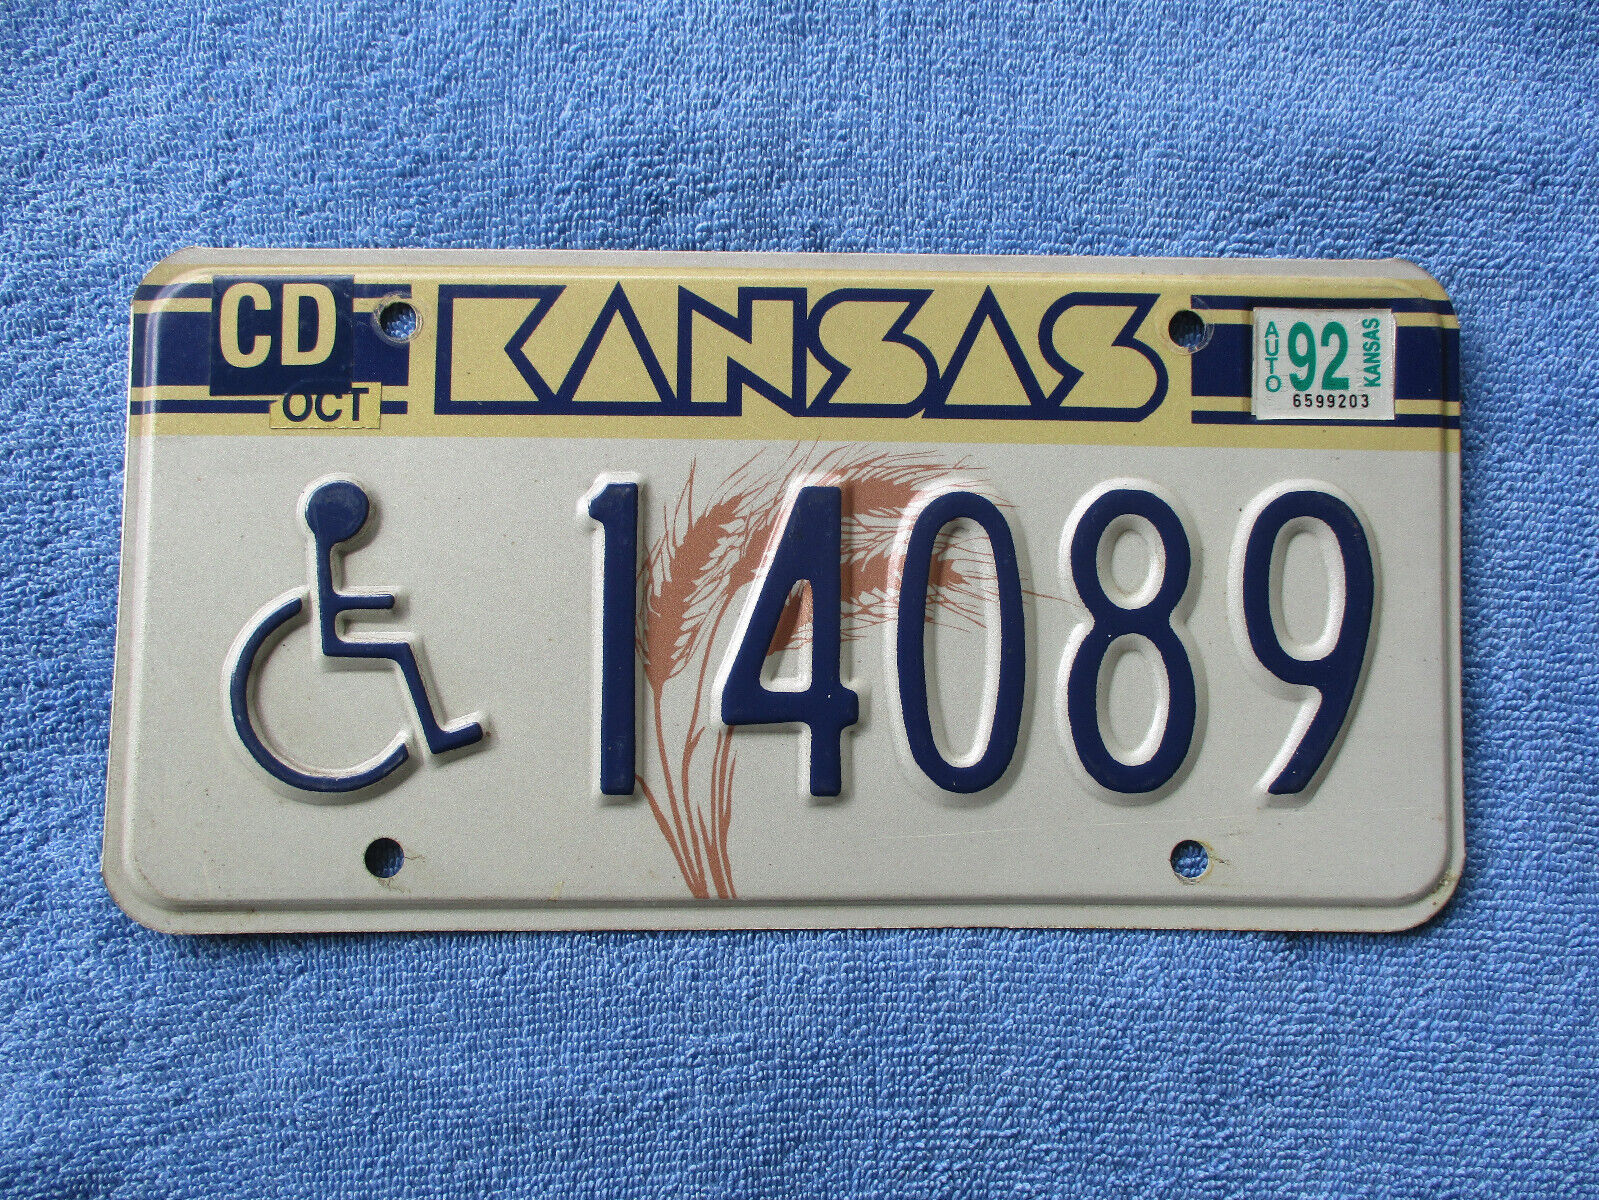 1992 Kansas Handicap License Plate (wheat graphic) # 14089